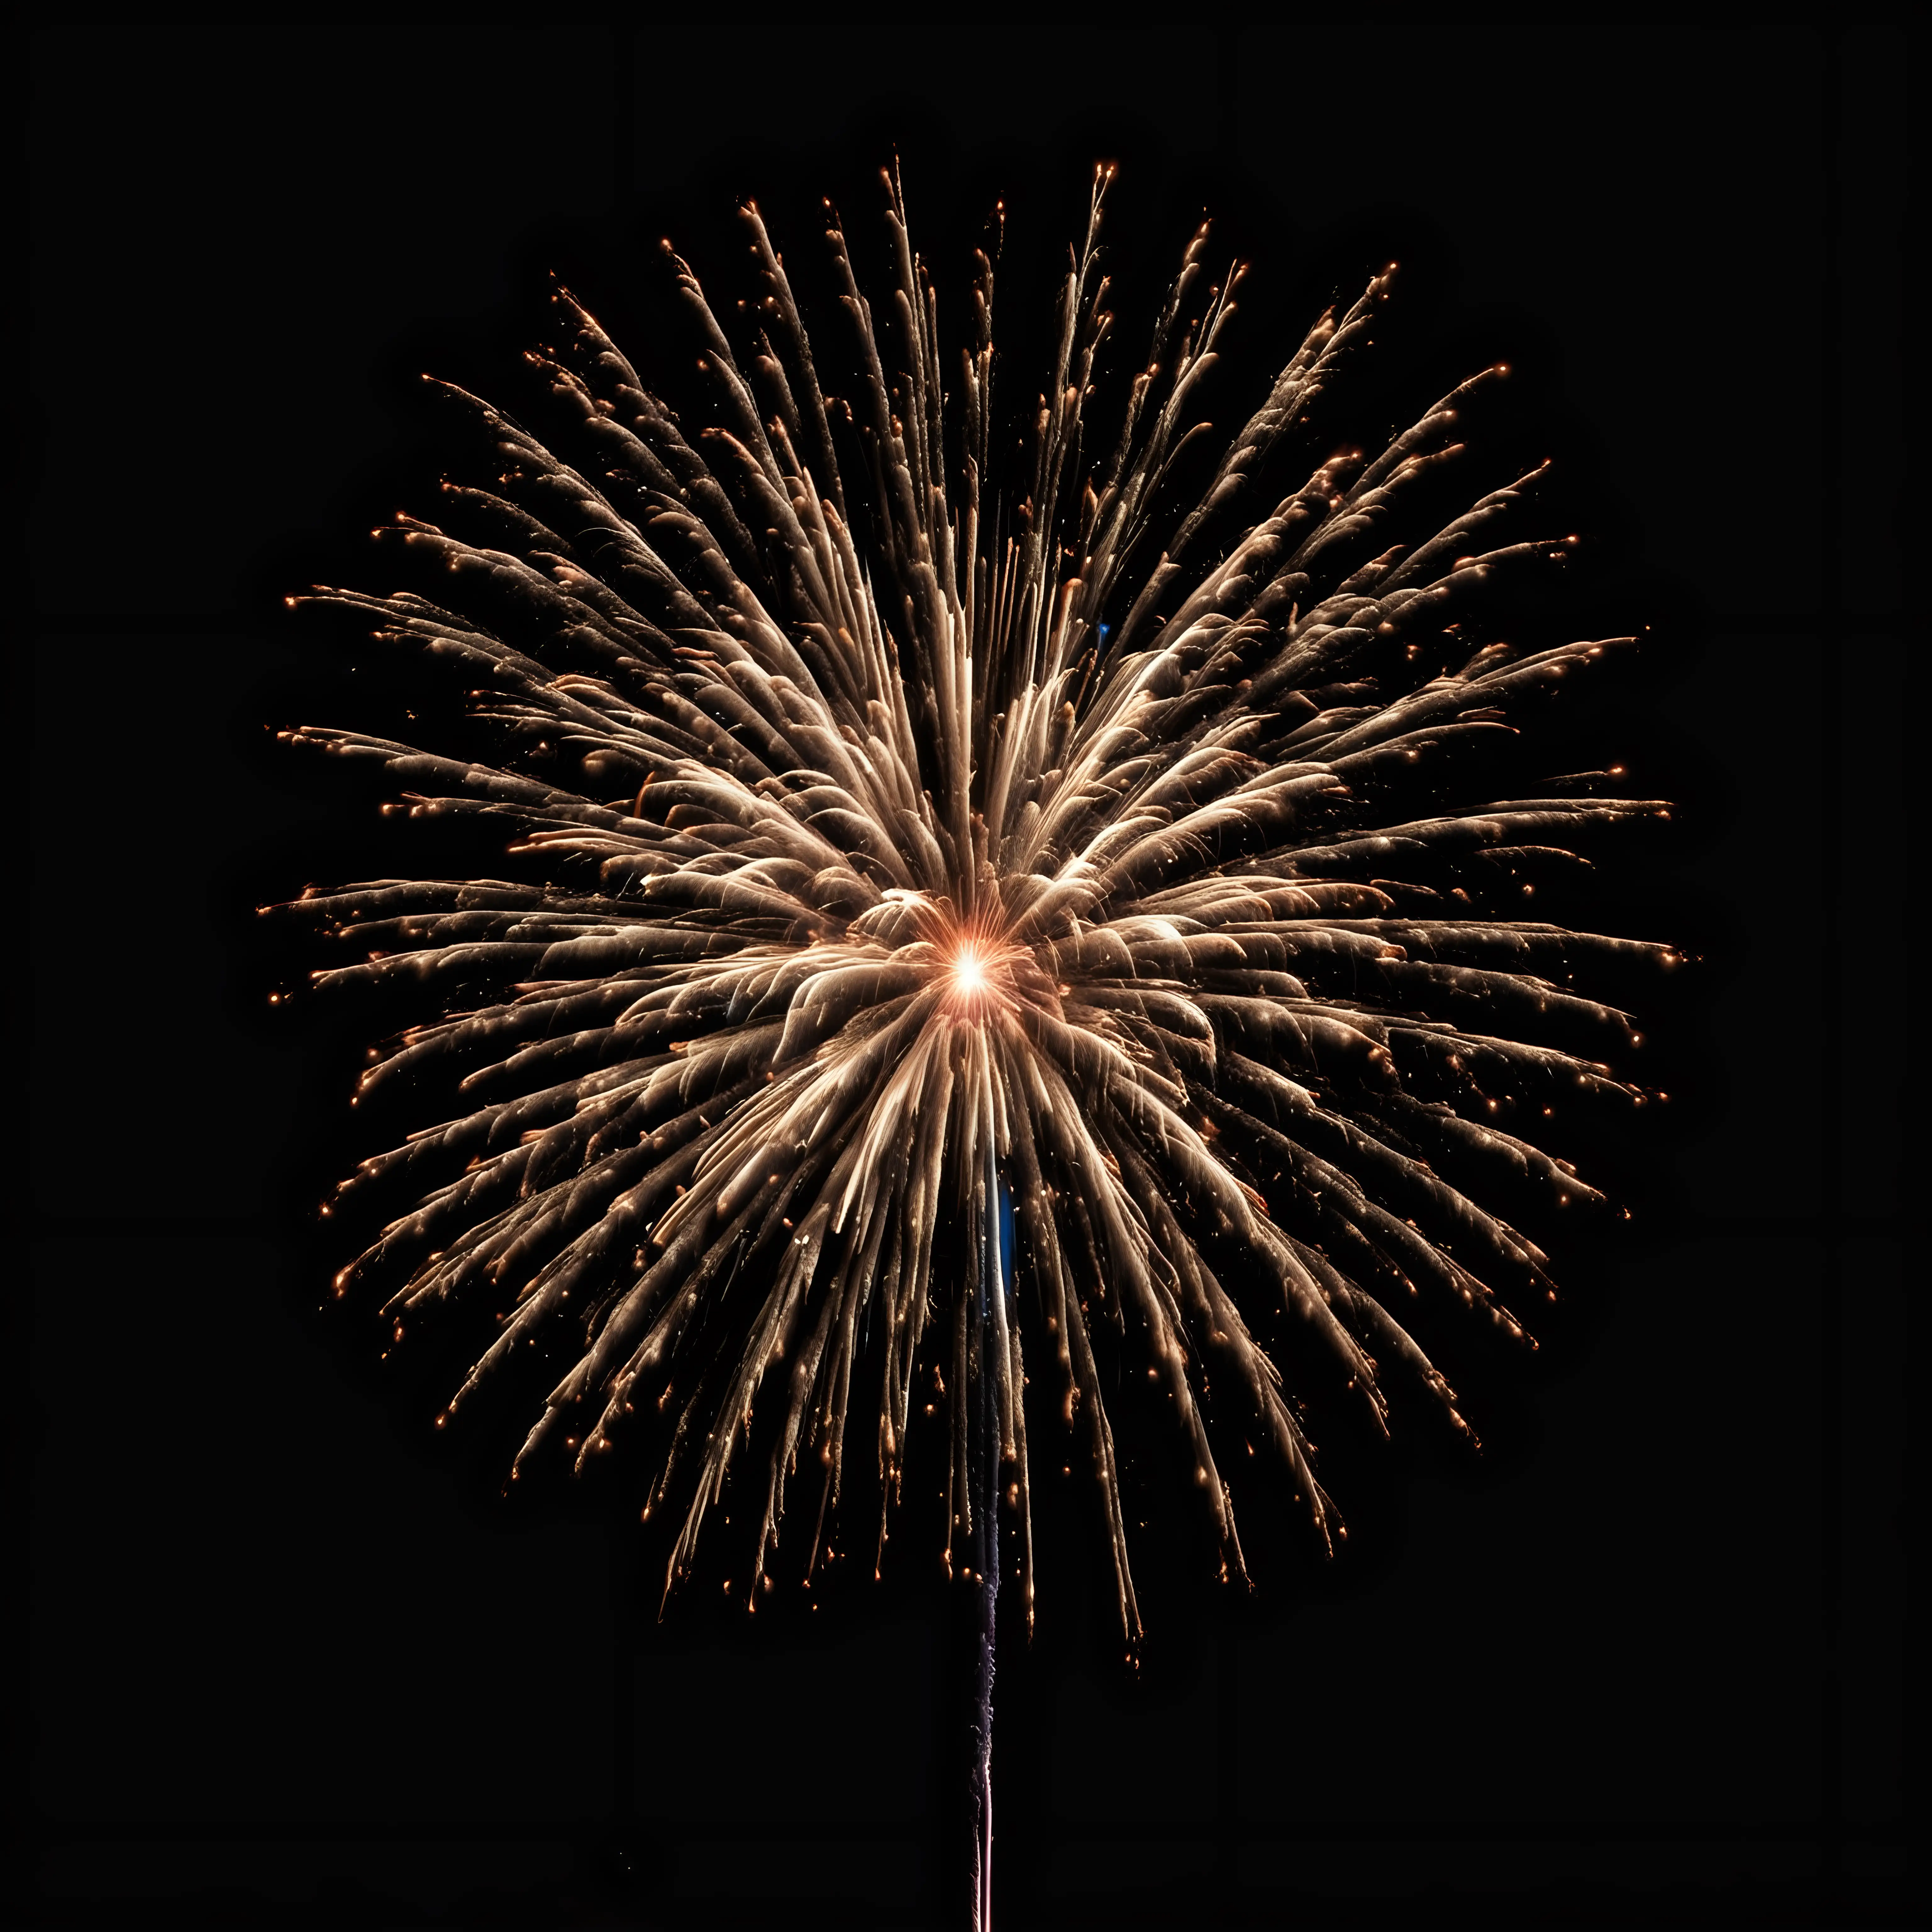 Vibrant Fireworks Display Against a Dramatic Black Sky